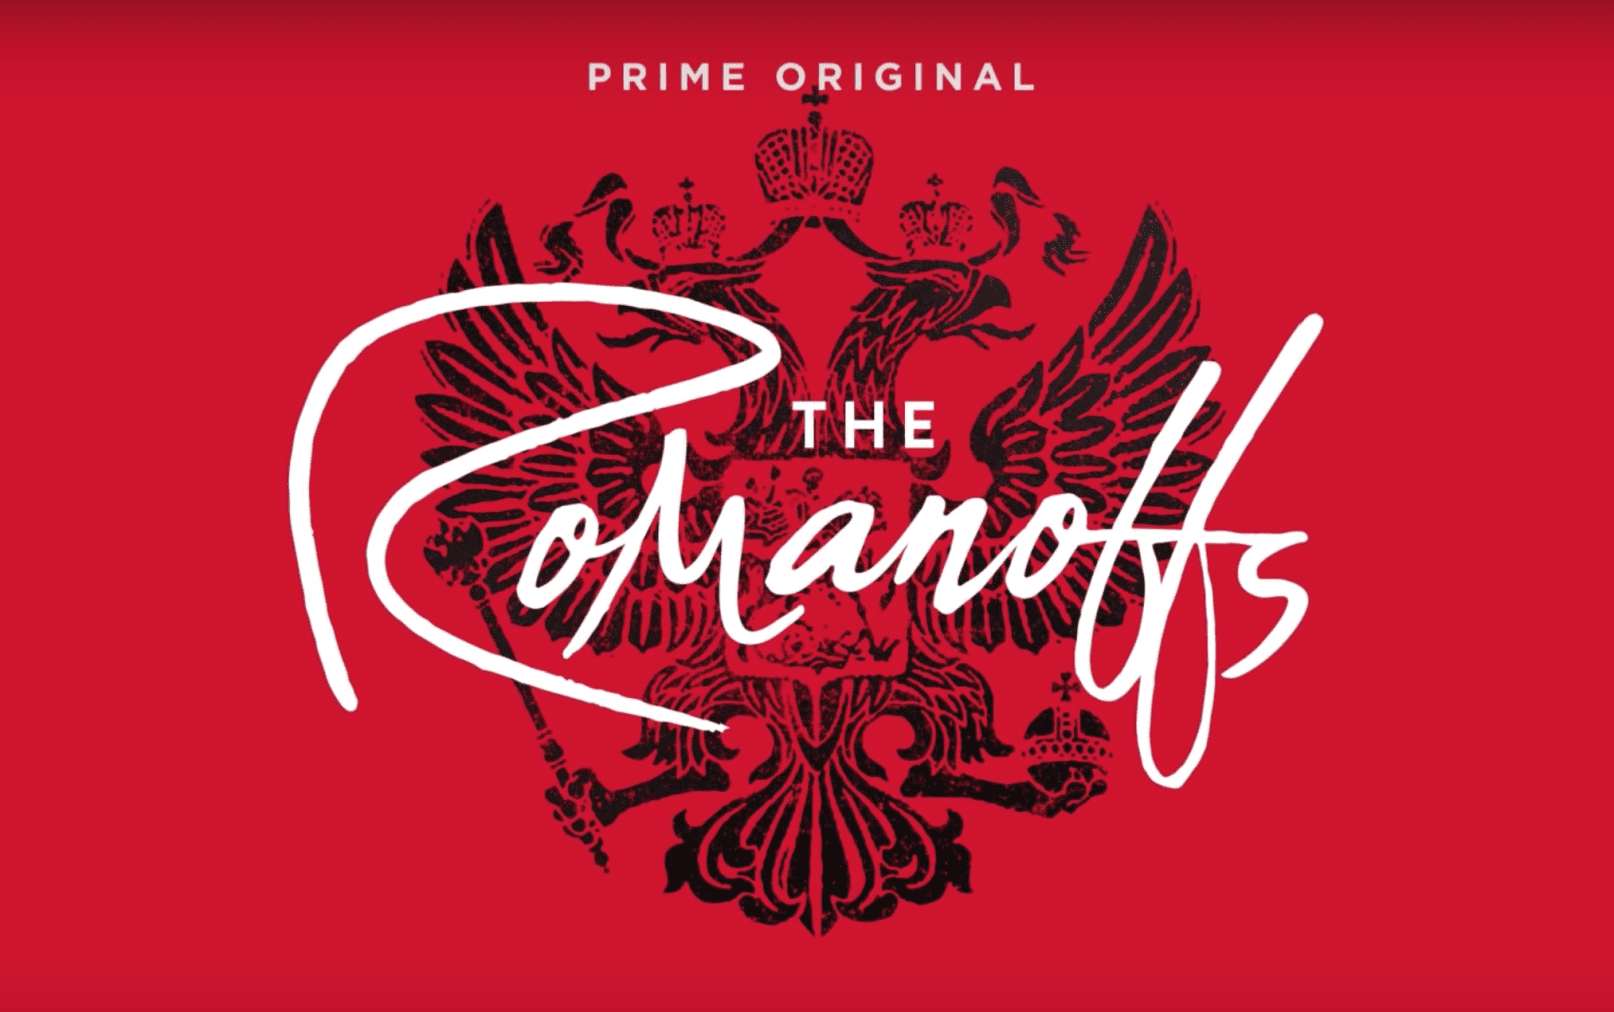 The Romanoffs official logo on Amazon Prime